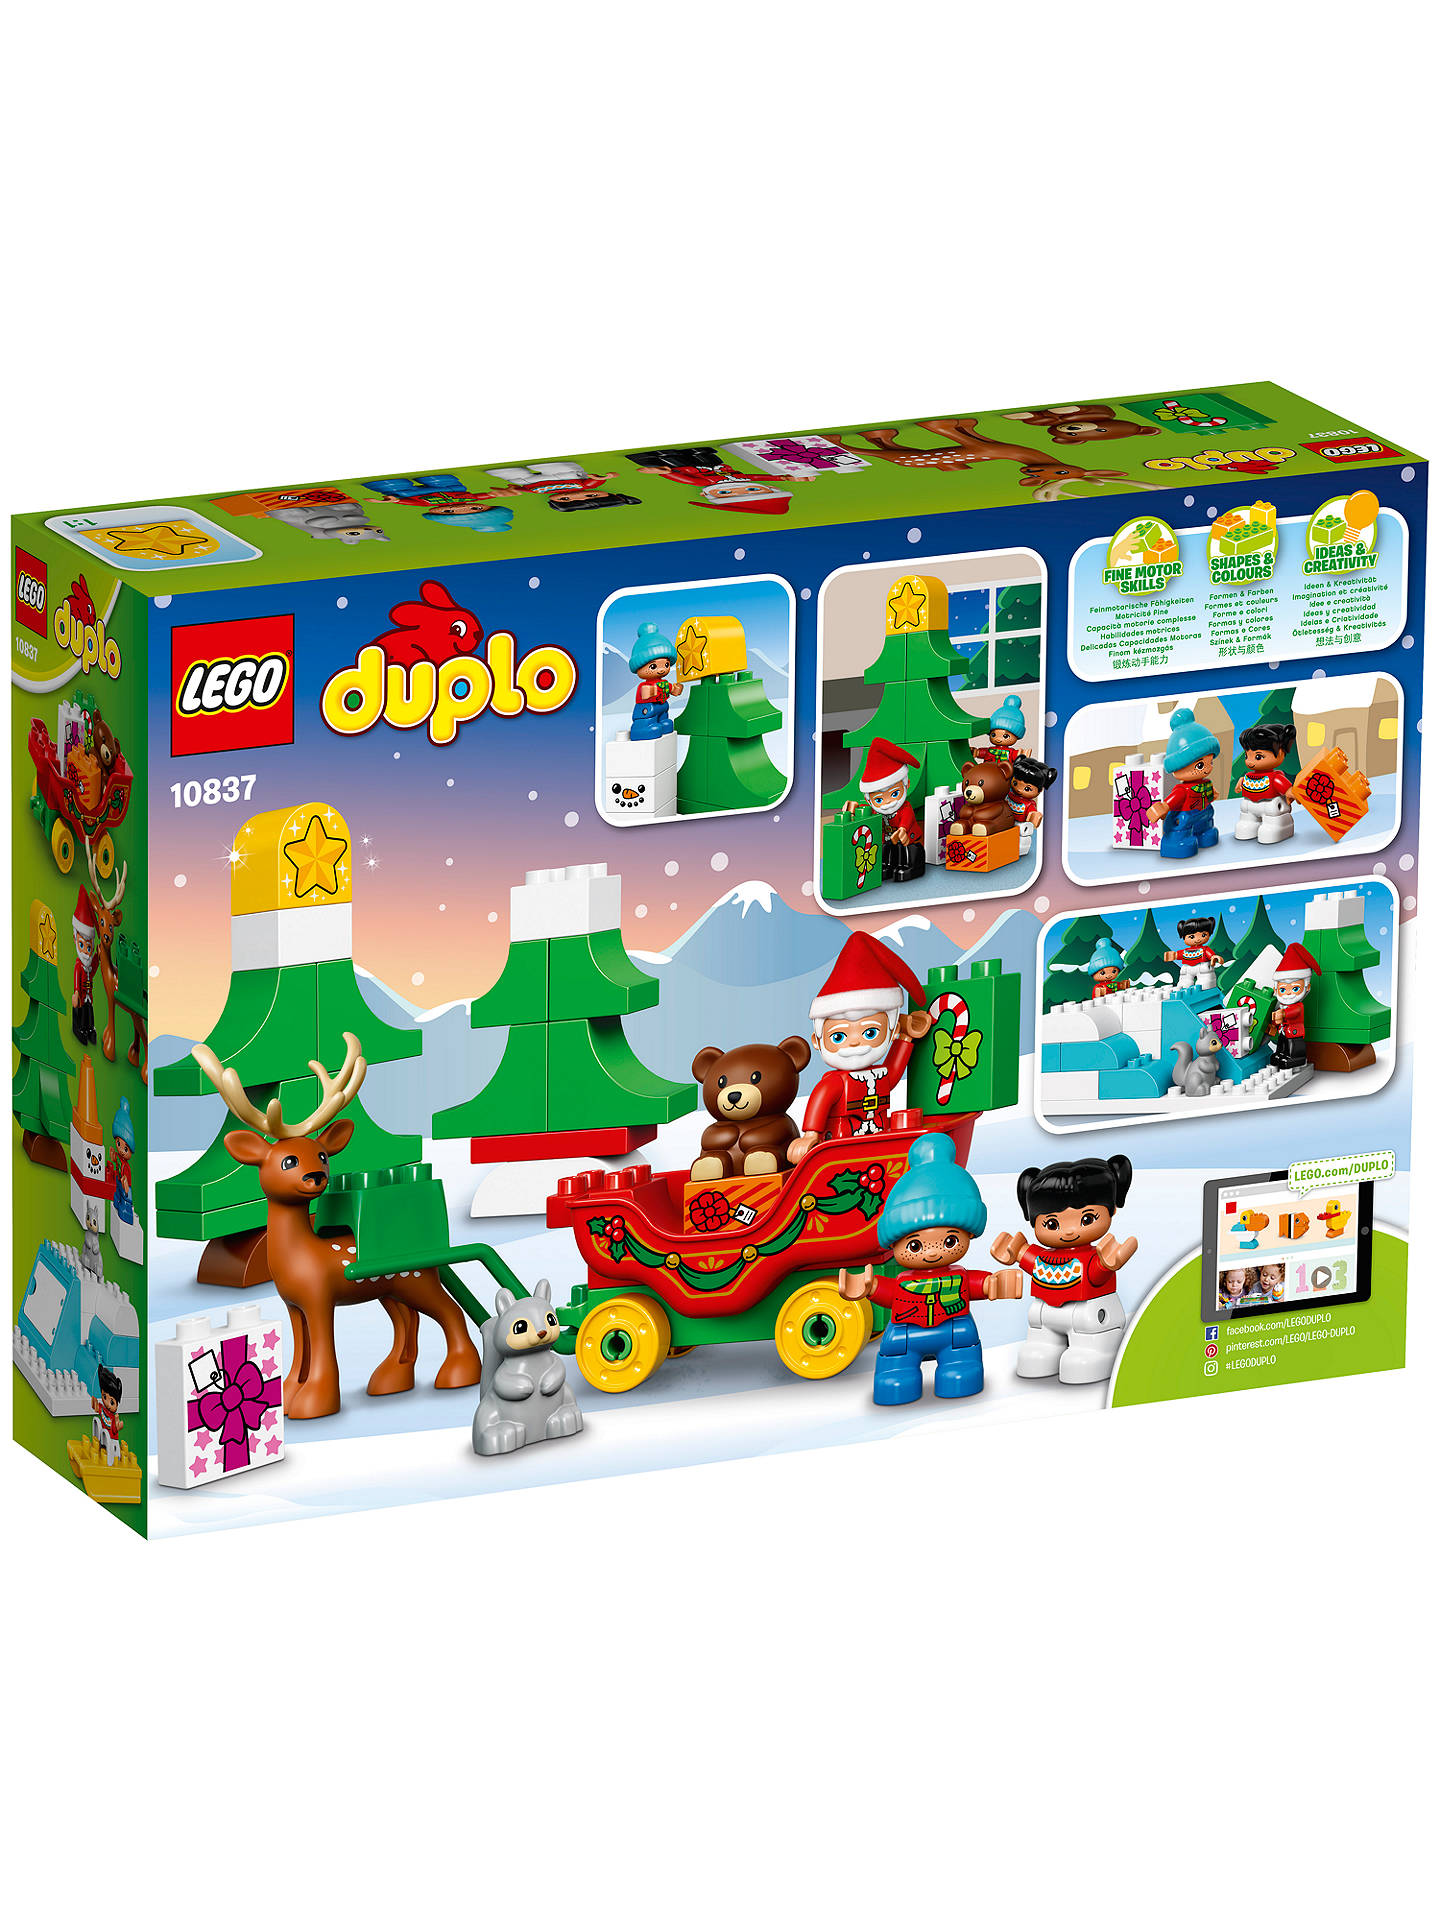 LEGO DUPLO 10837 Santa's Winter Holiday at John Lewis & Partners